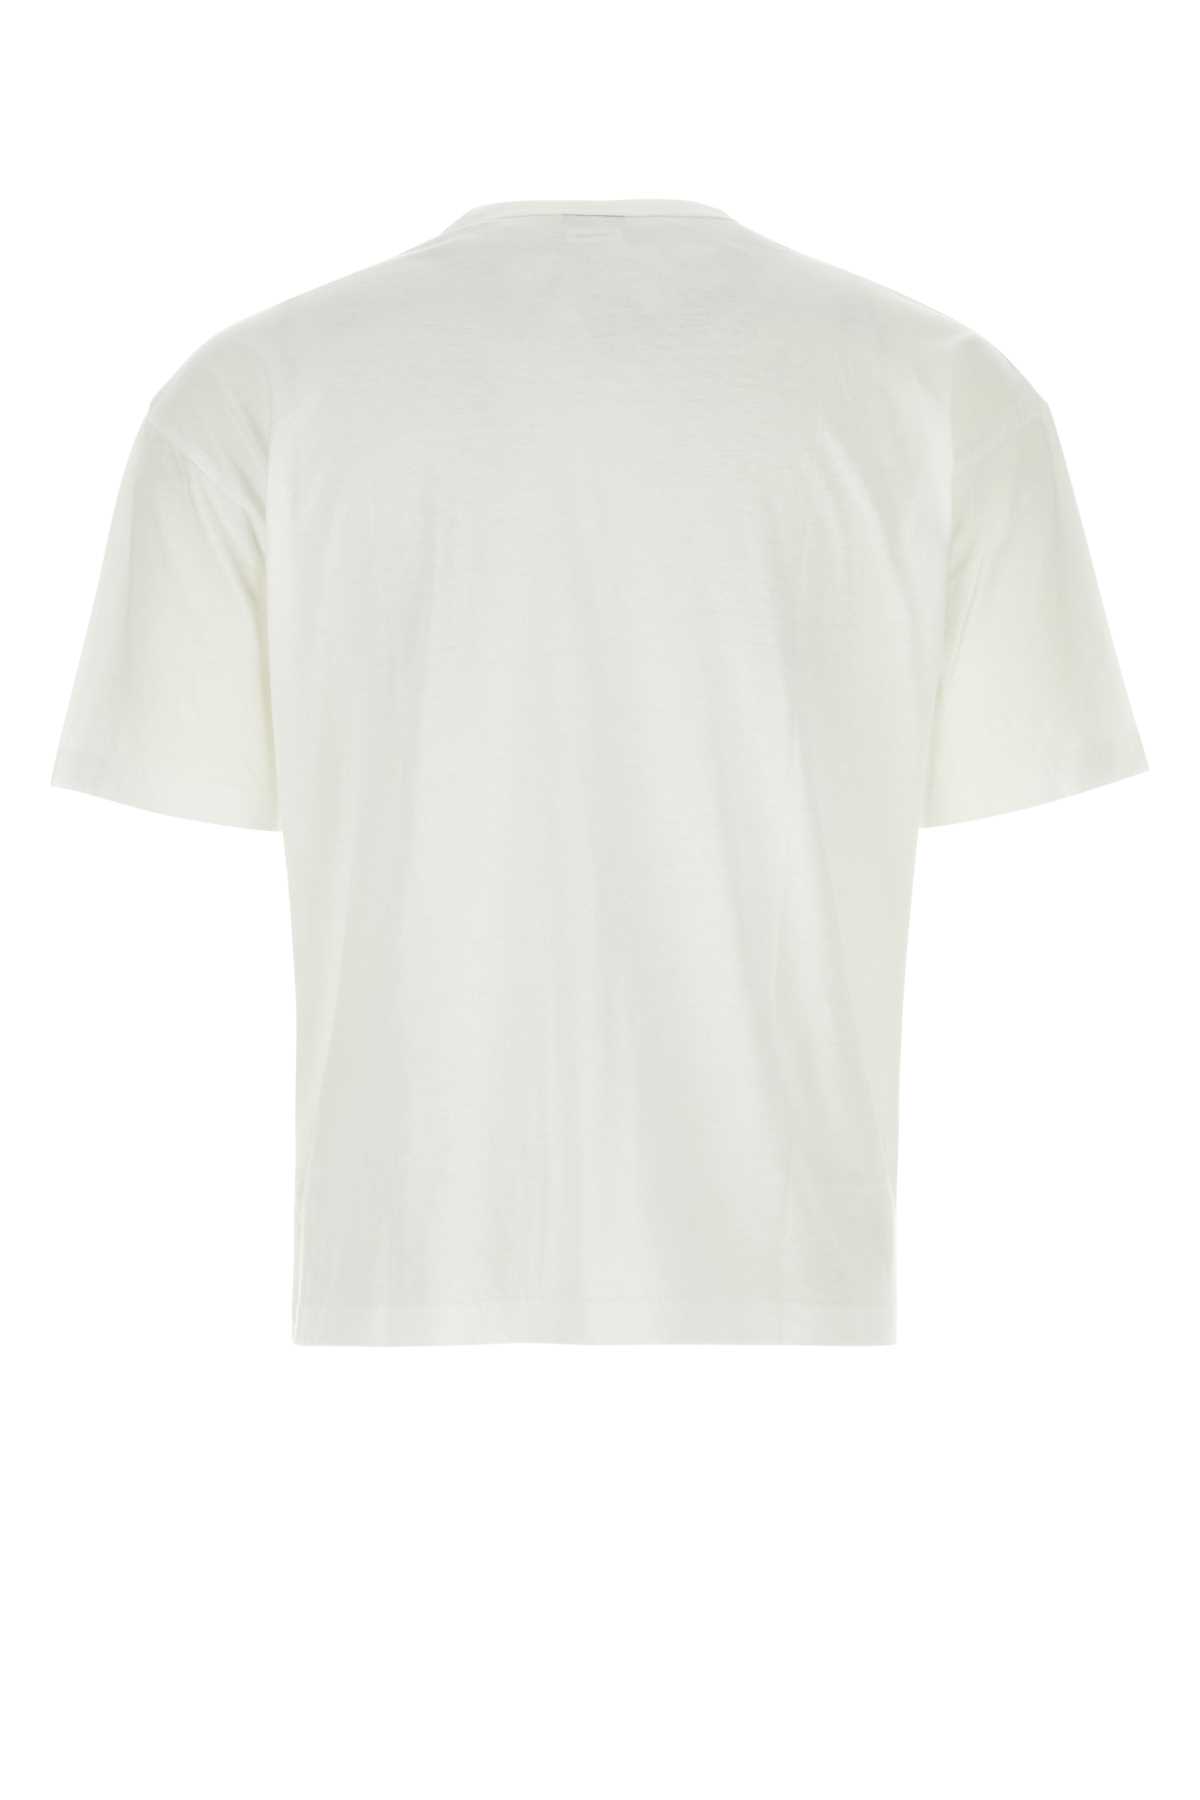 Shop Visvim White Cotton Blend T-shirt Set